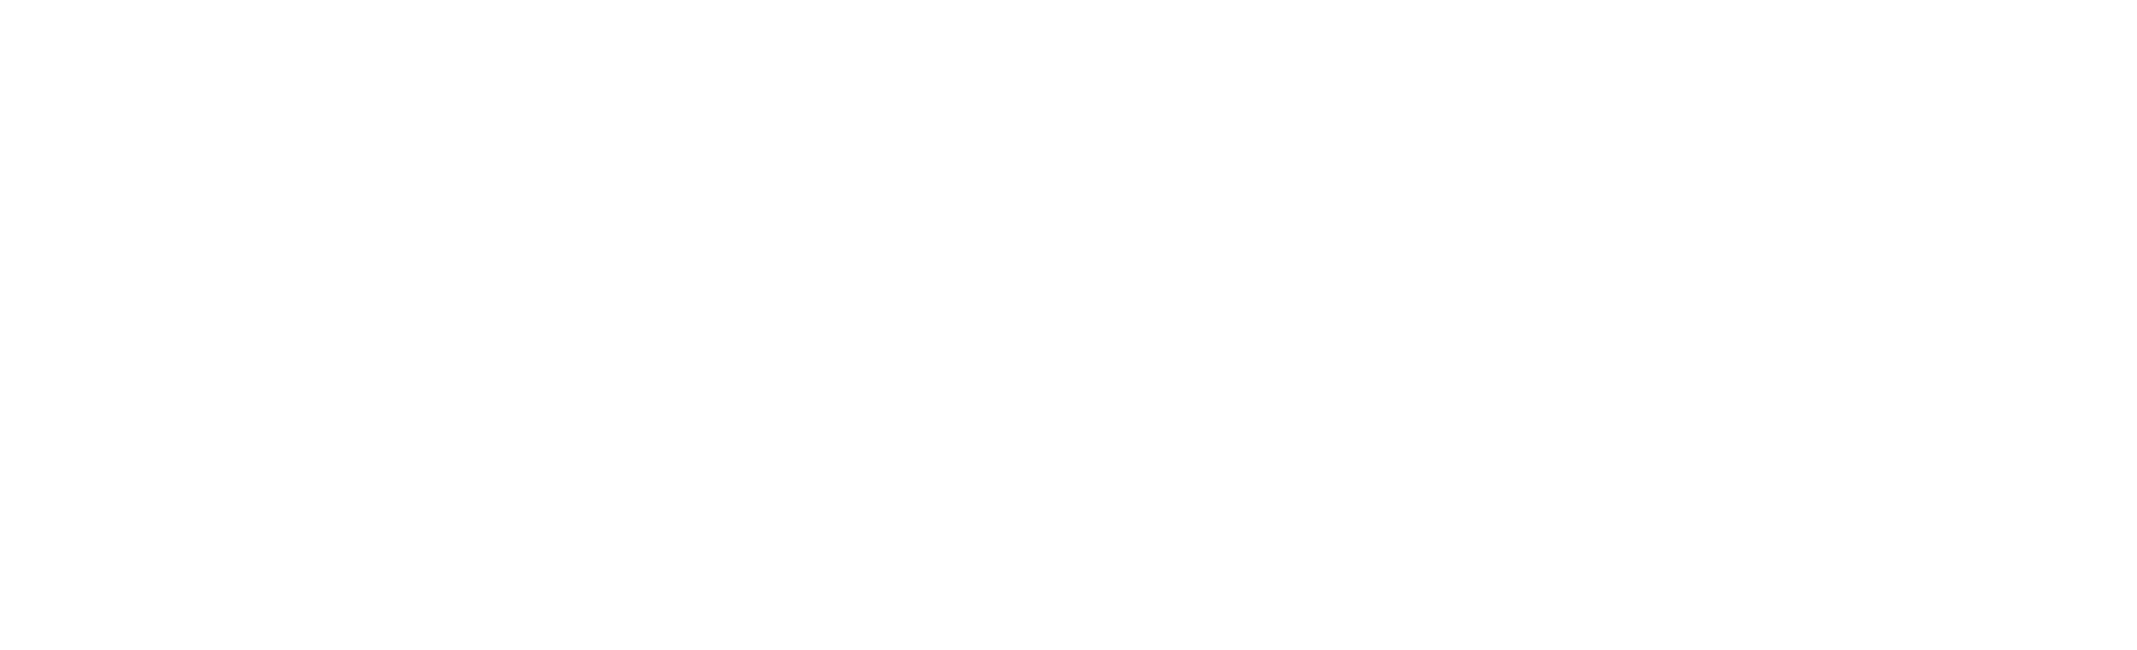 Fury Logo Confirm-01